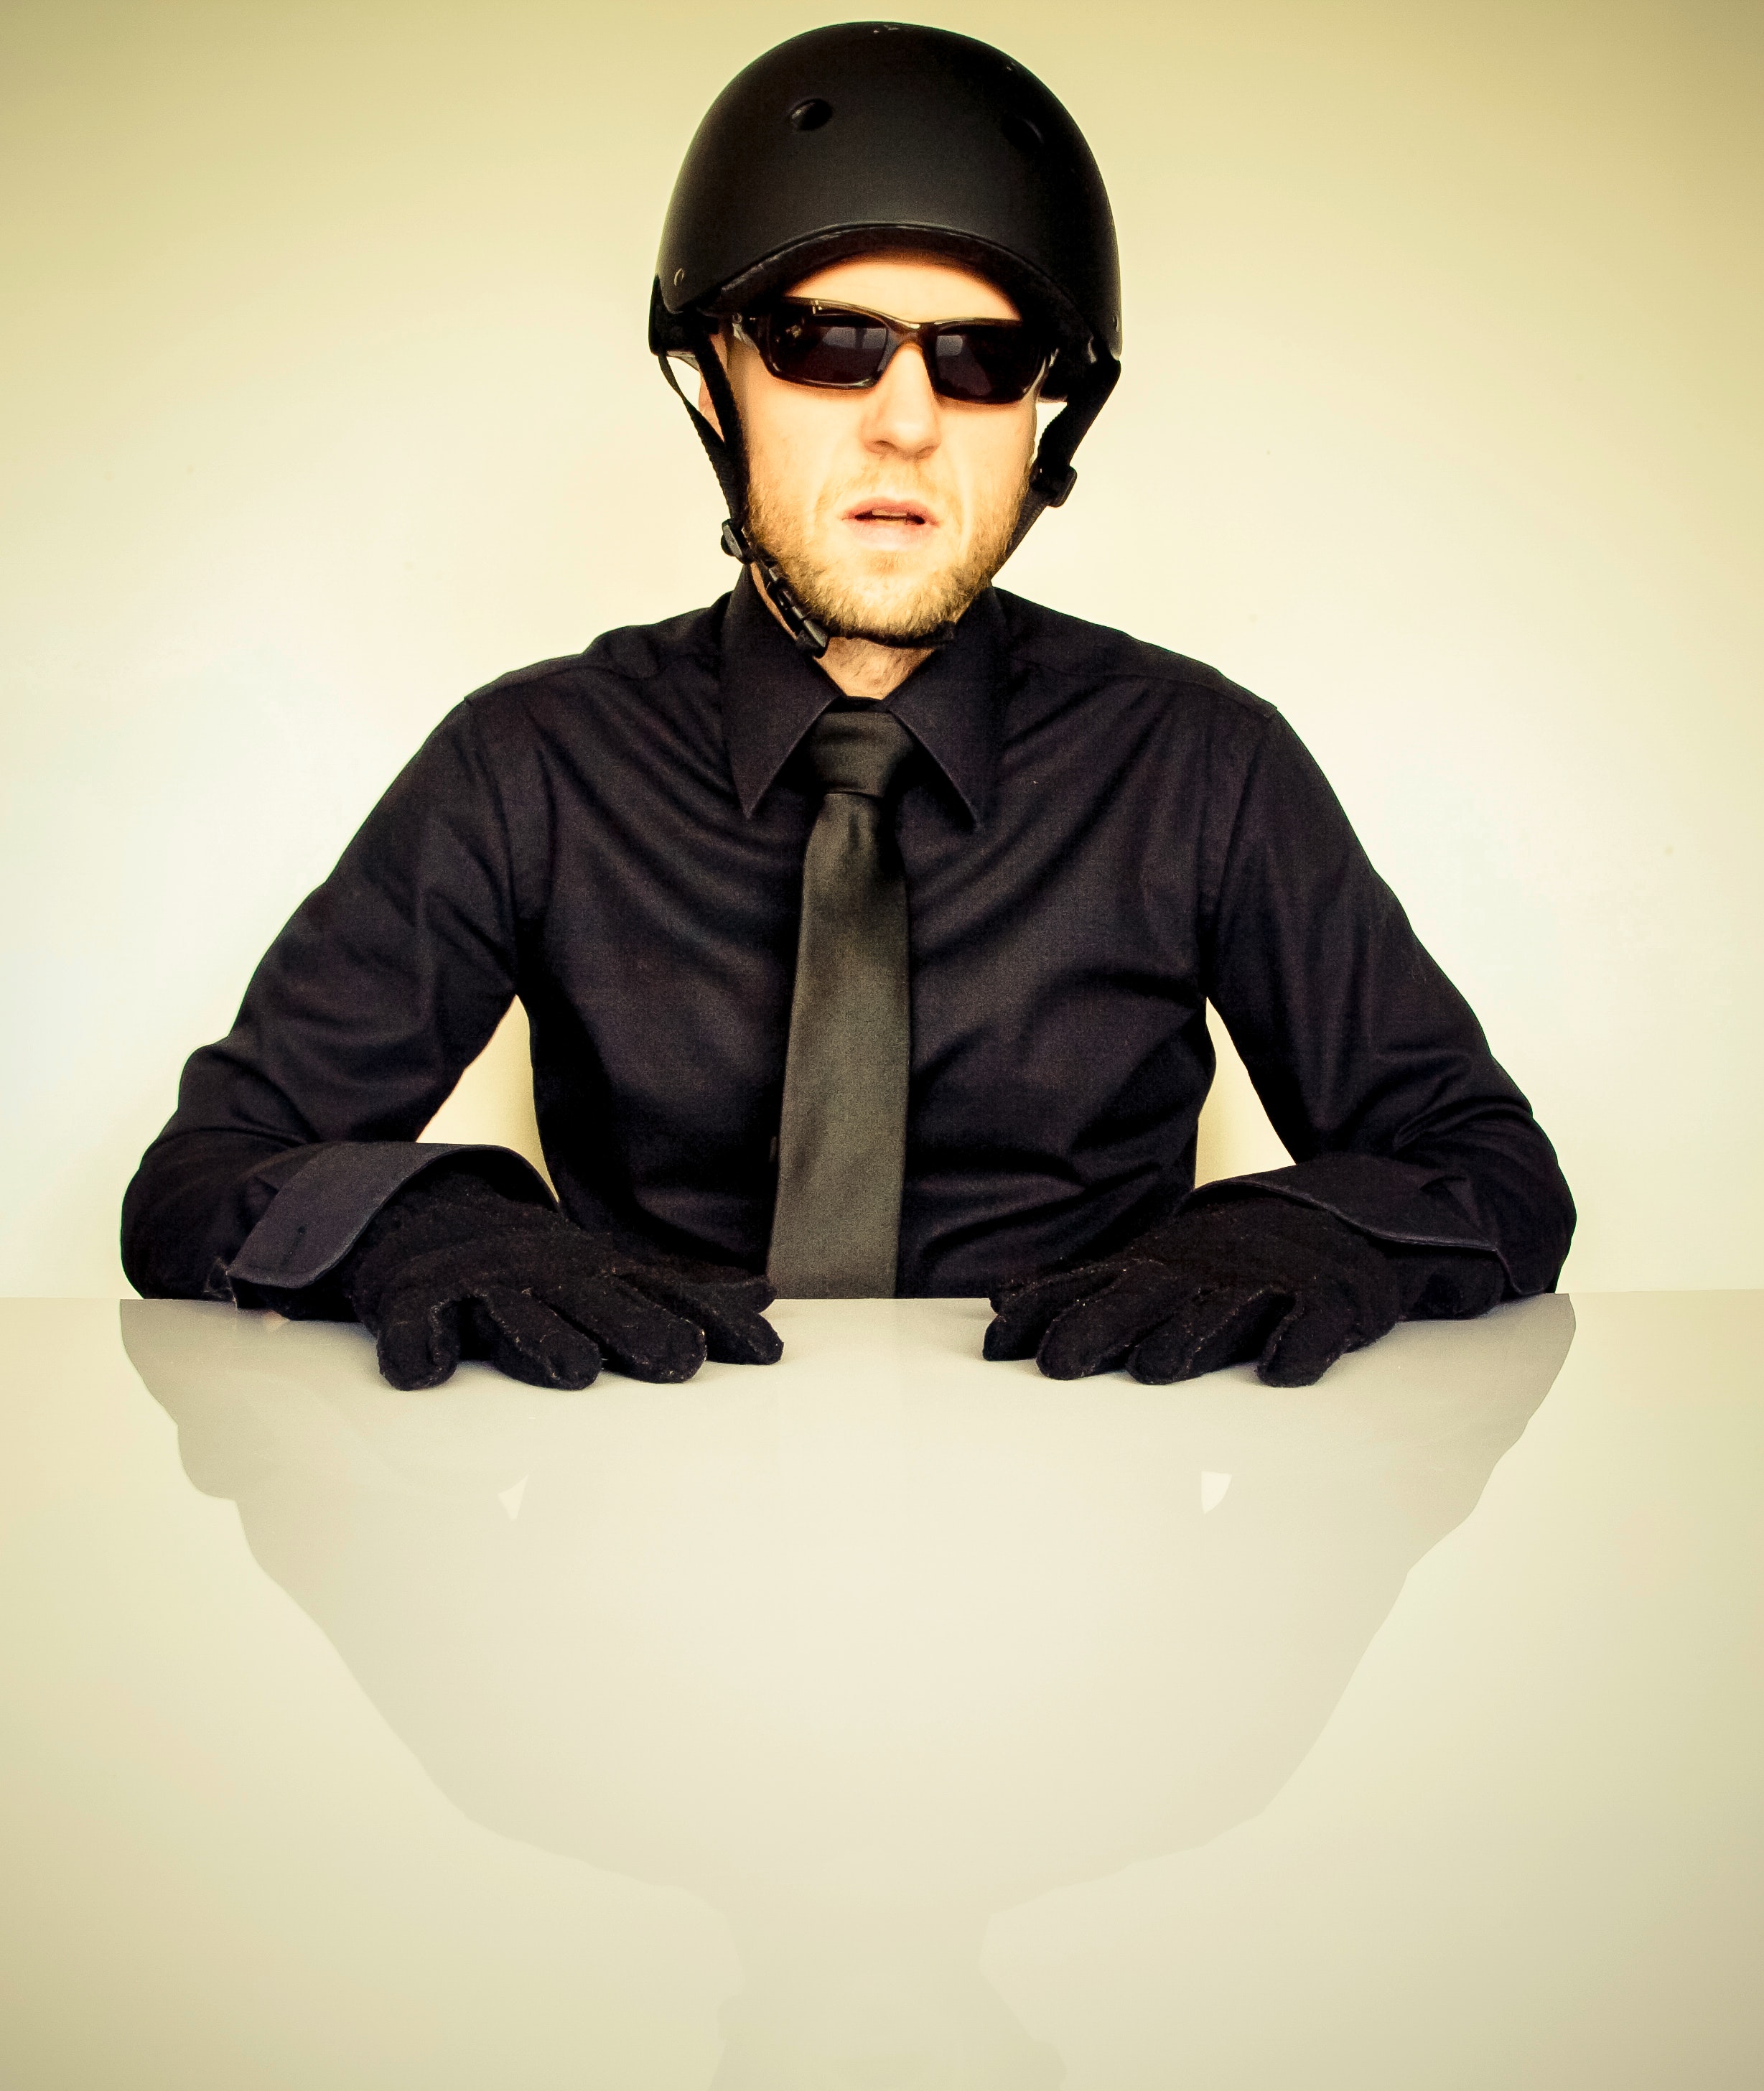 Man in black dress shirt wearing half helmet photo